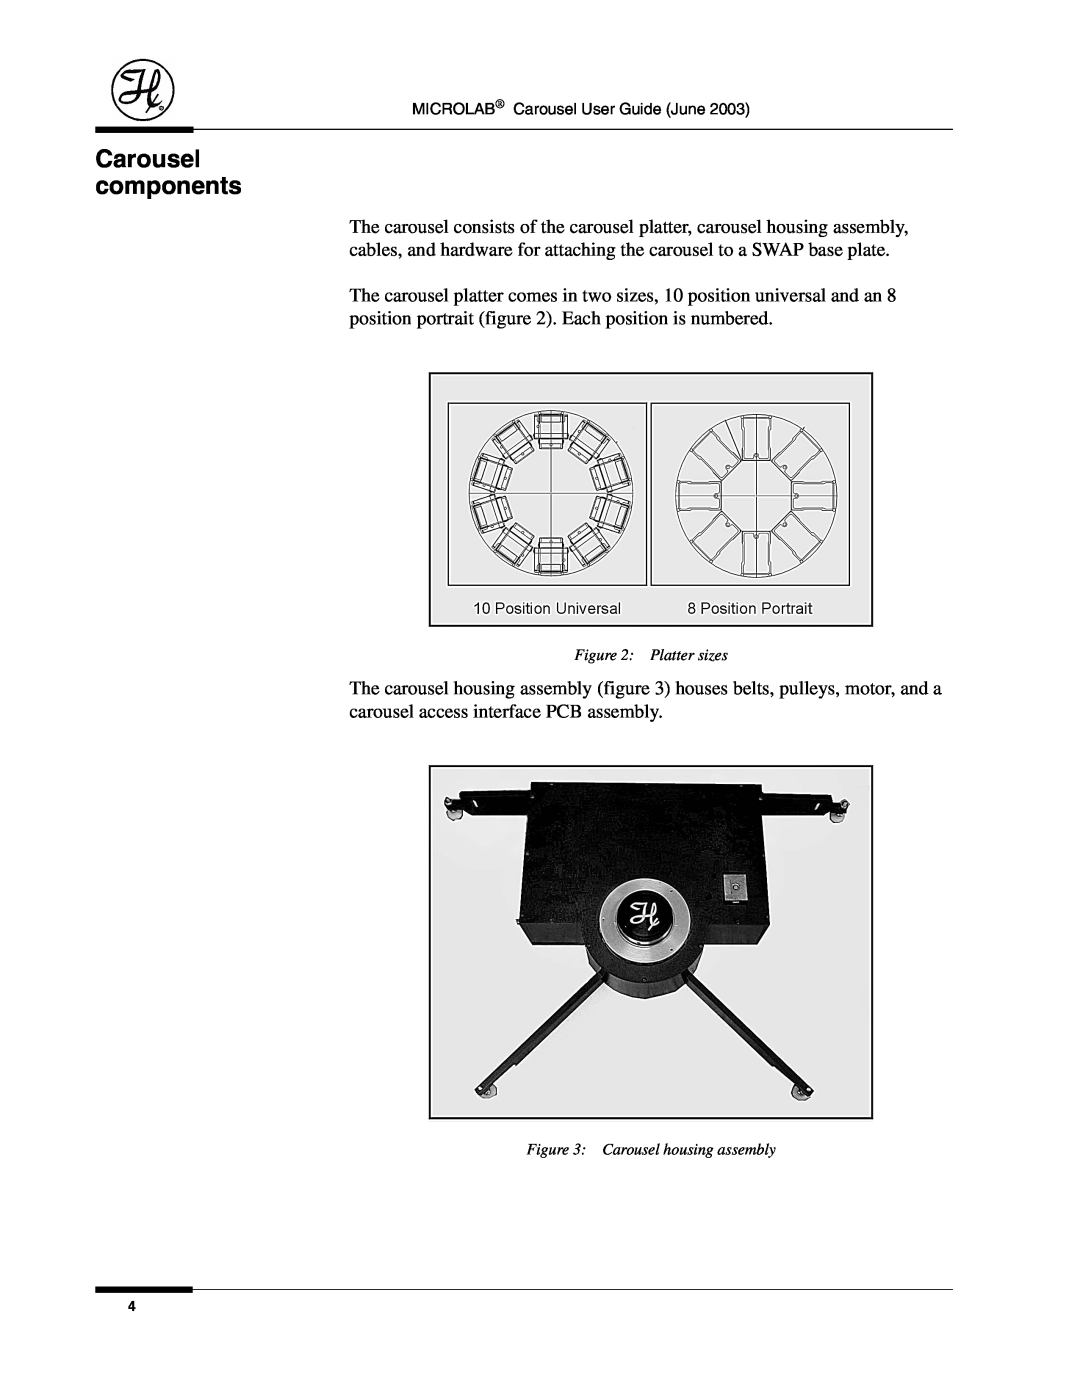 Hamilton Electronics 8534-01 manual Carousel components, Platter sizes, Carousel housing assembly 